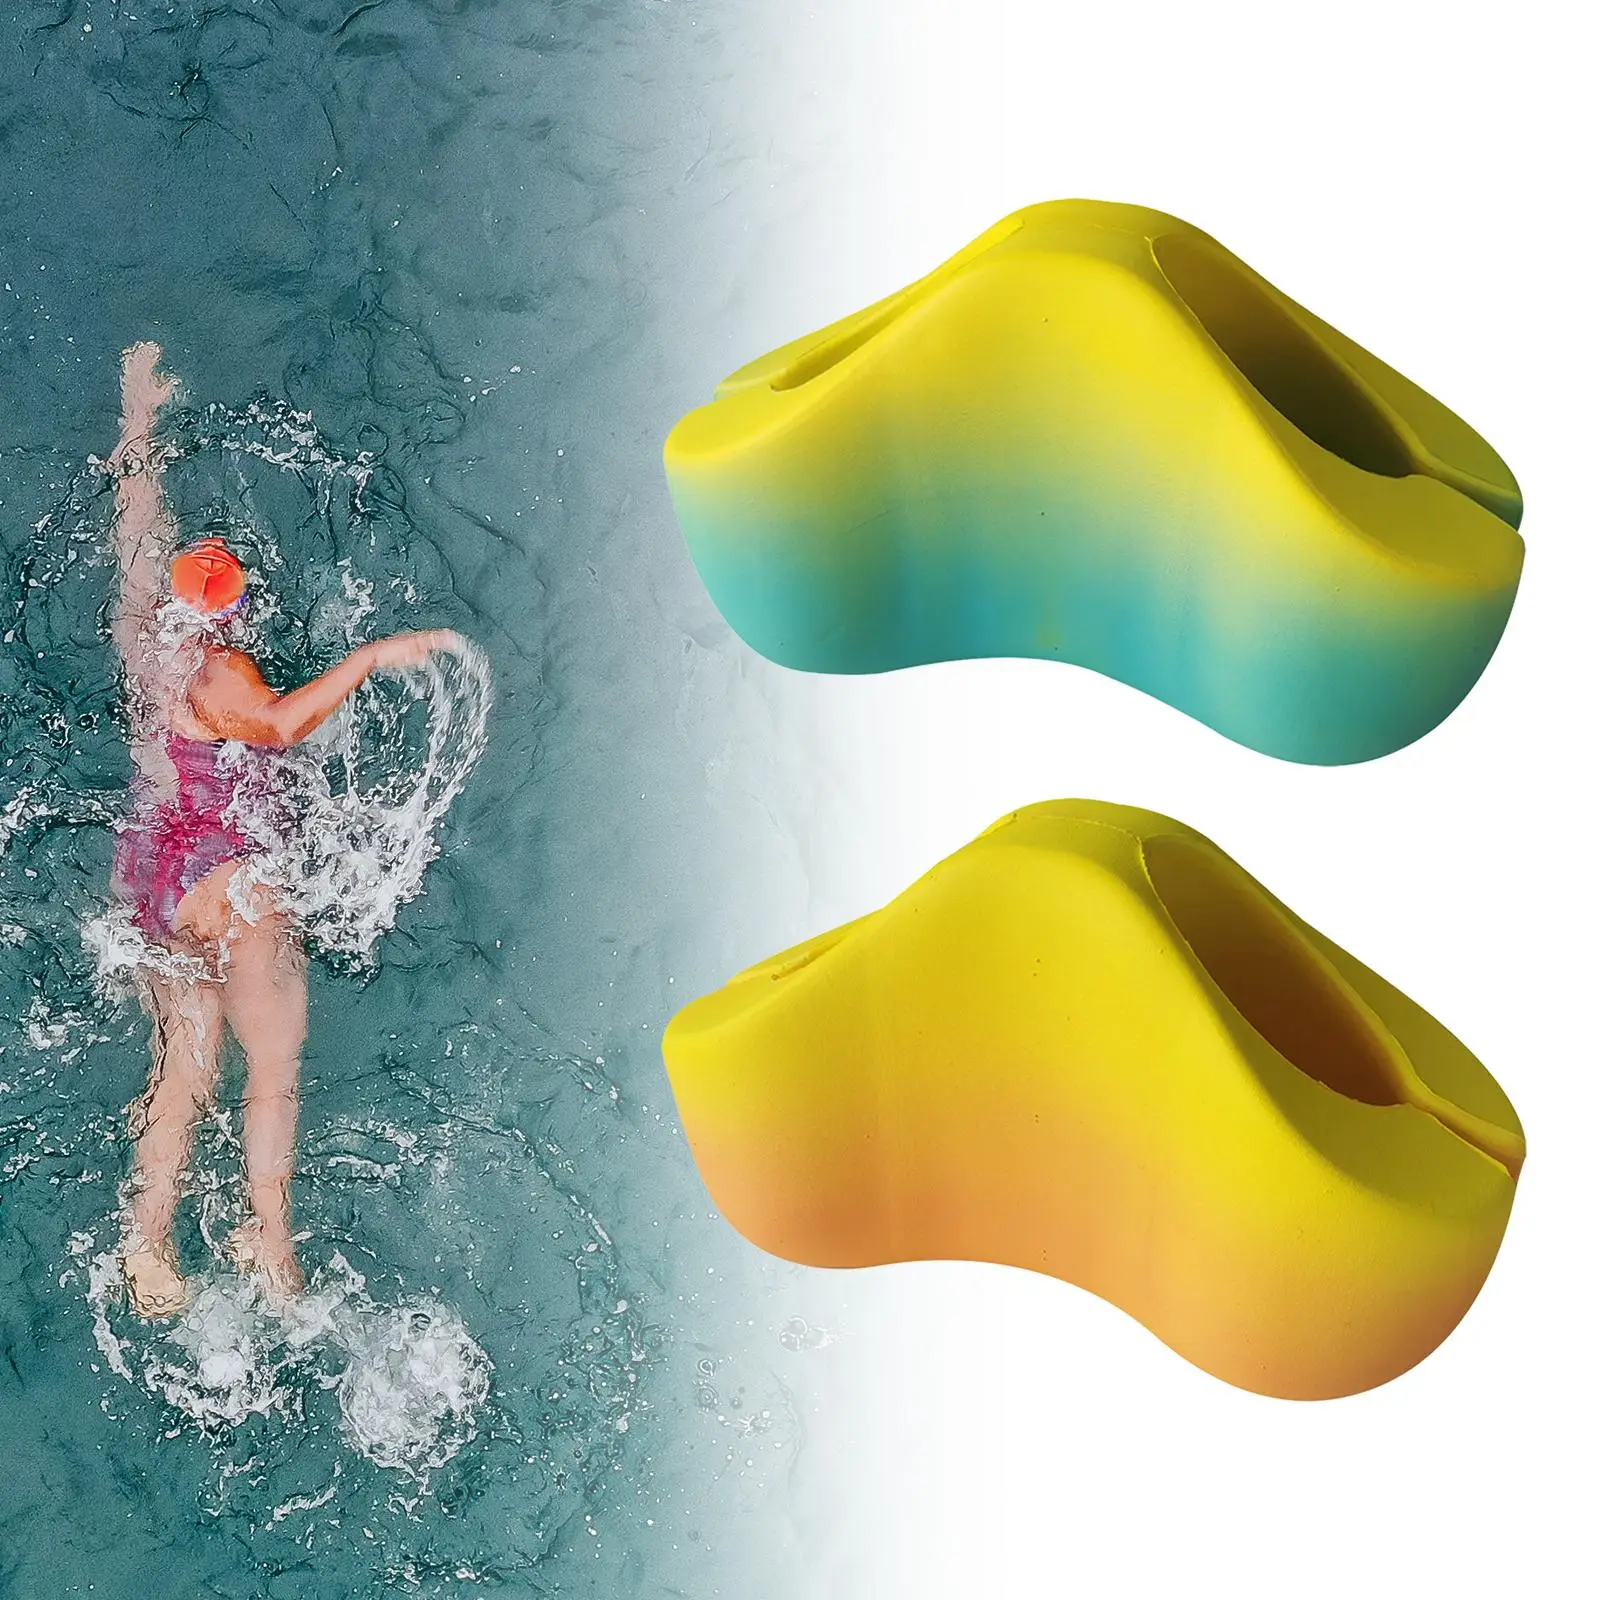 Pull Buoy Leg Float, Floating Pool Swim Buoy Swimming Stroke Kickboard for Junior Beginners Body Strength Water Exercise